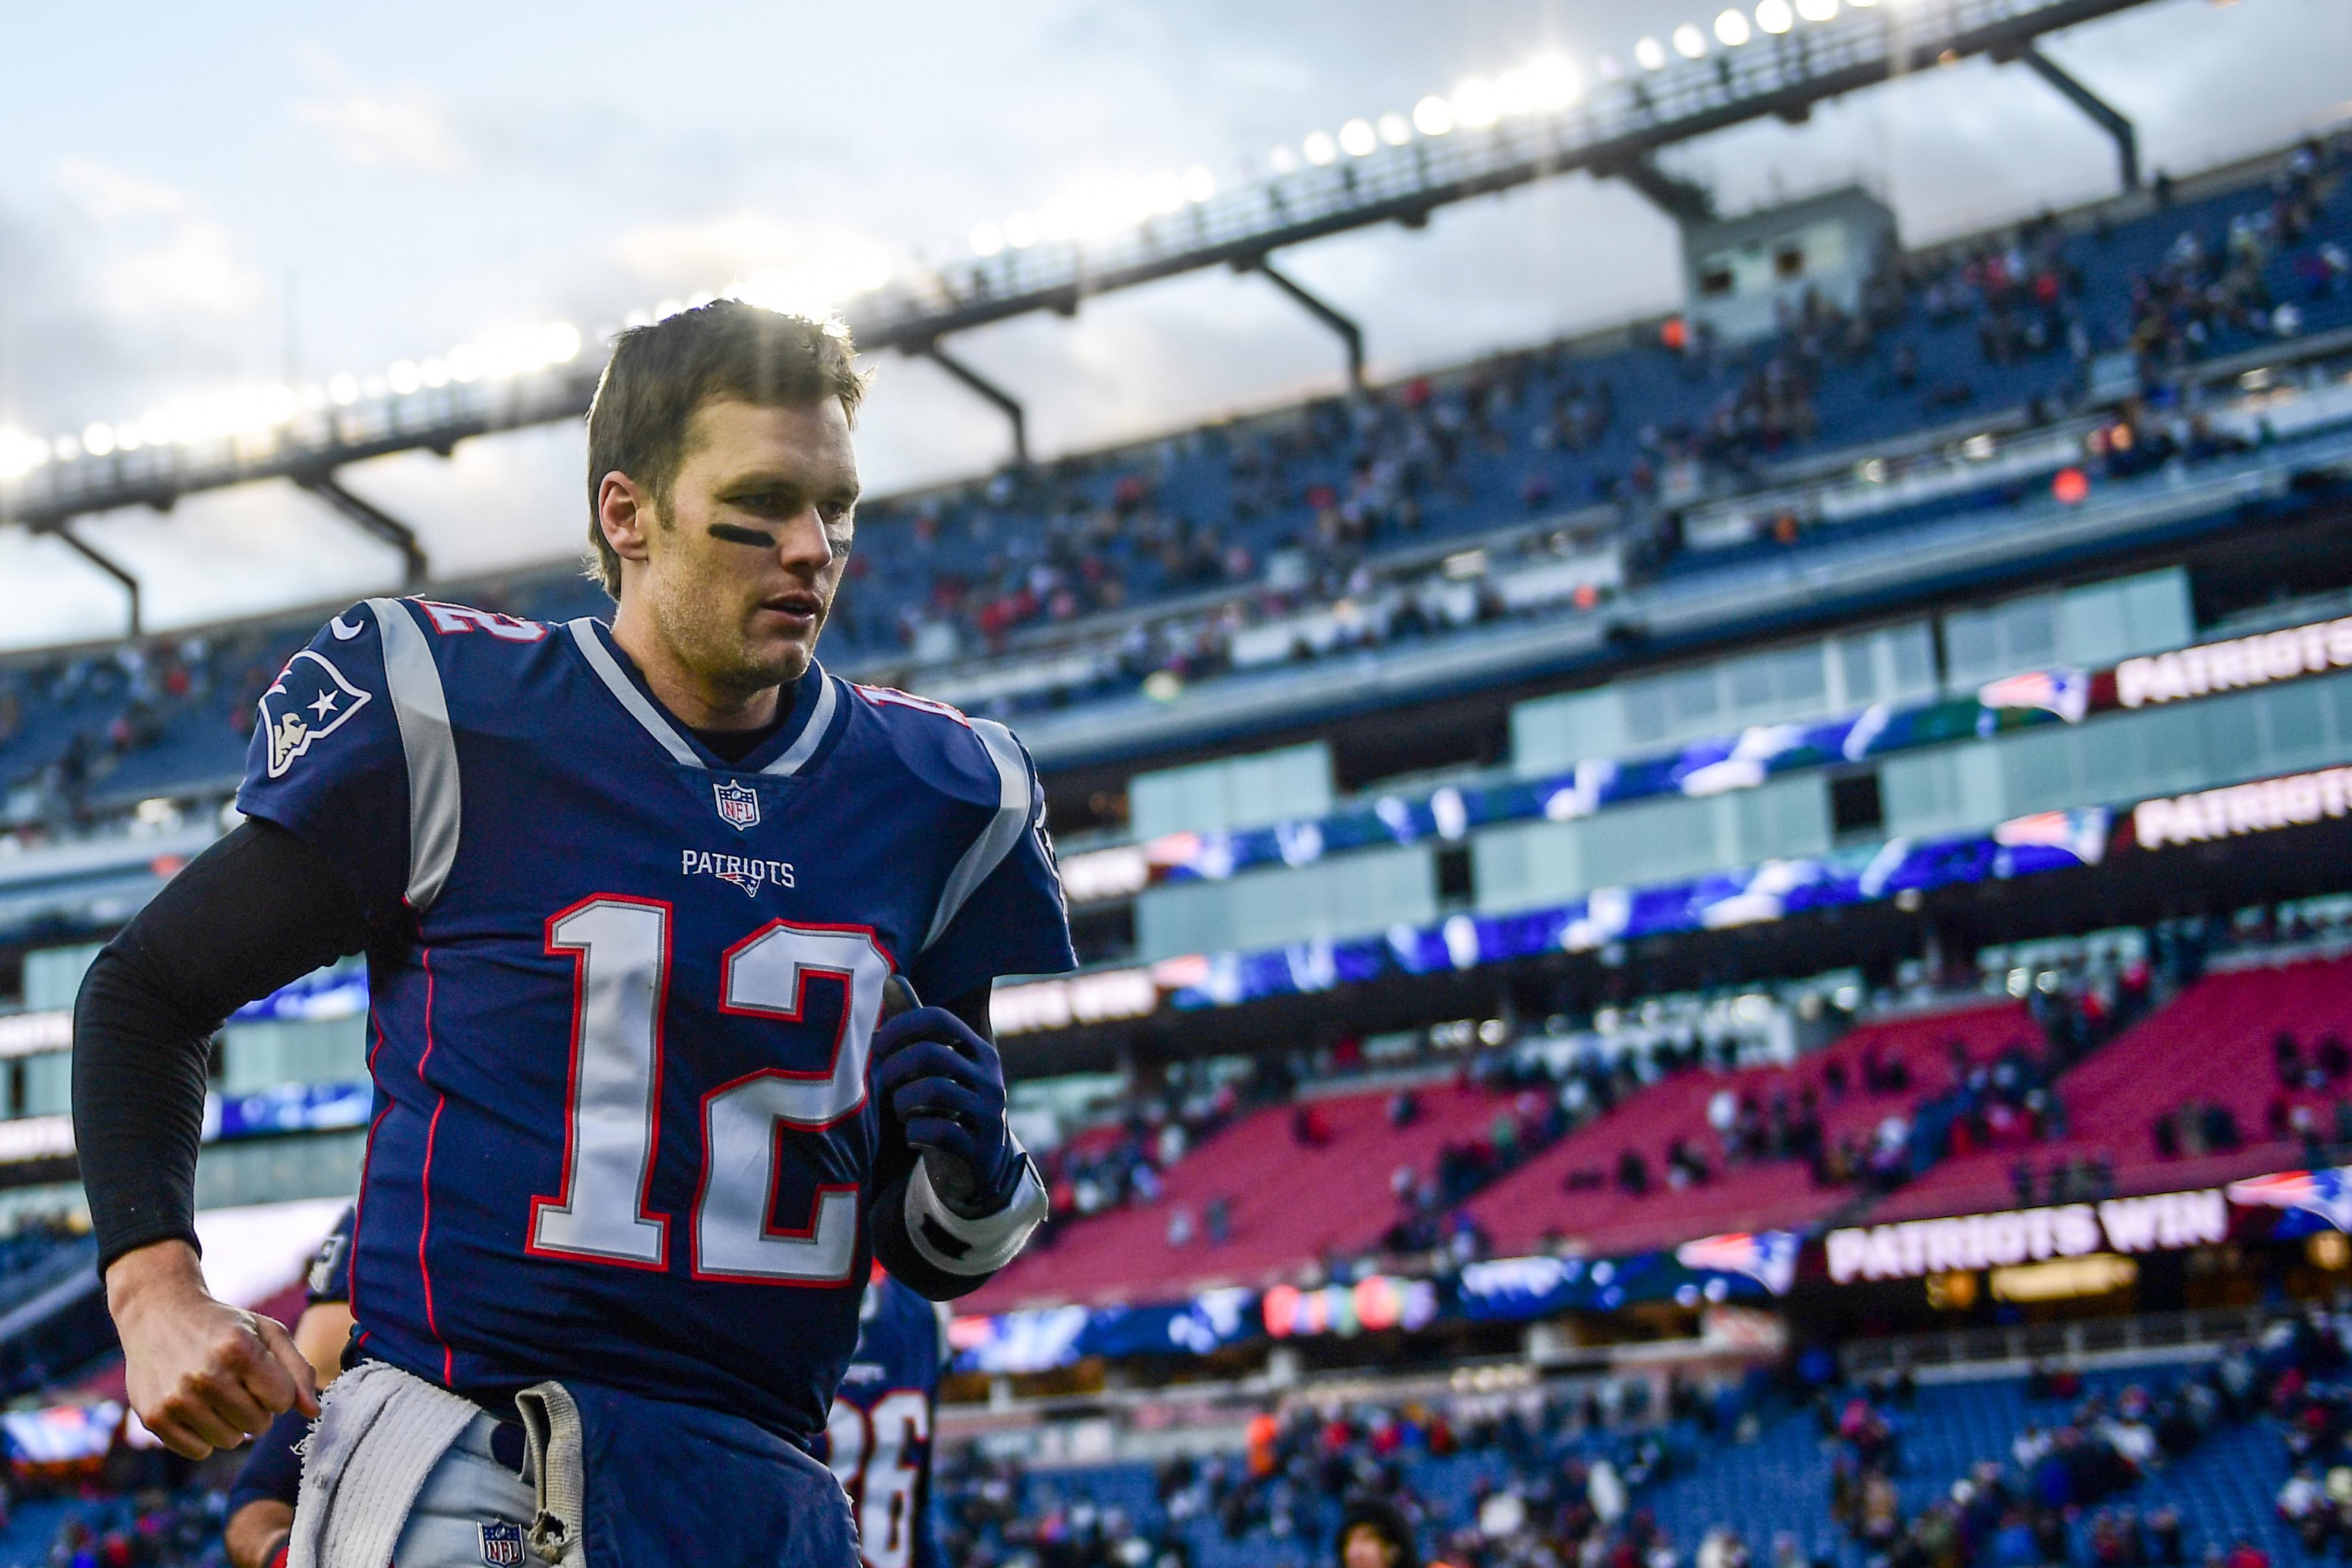 Deion Sanders believes Tom Brady's Super Bowl wins record will